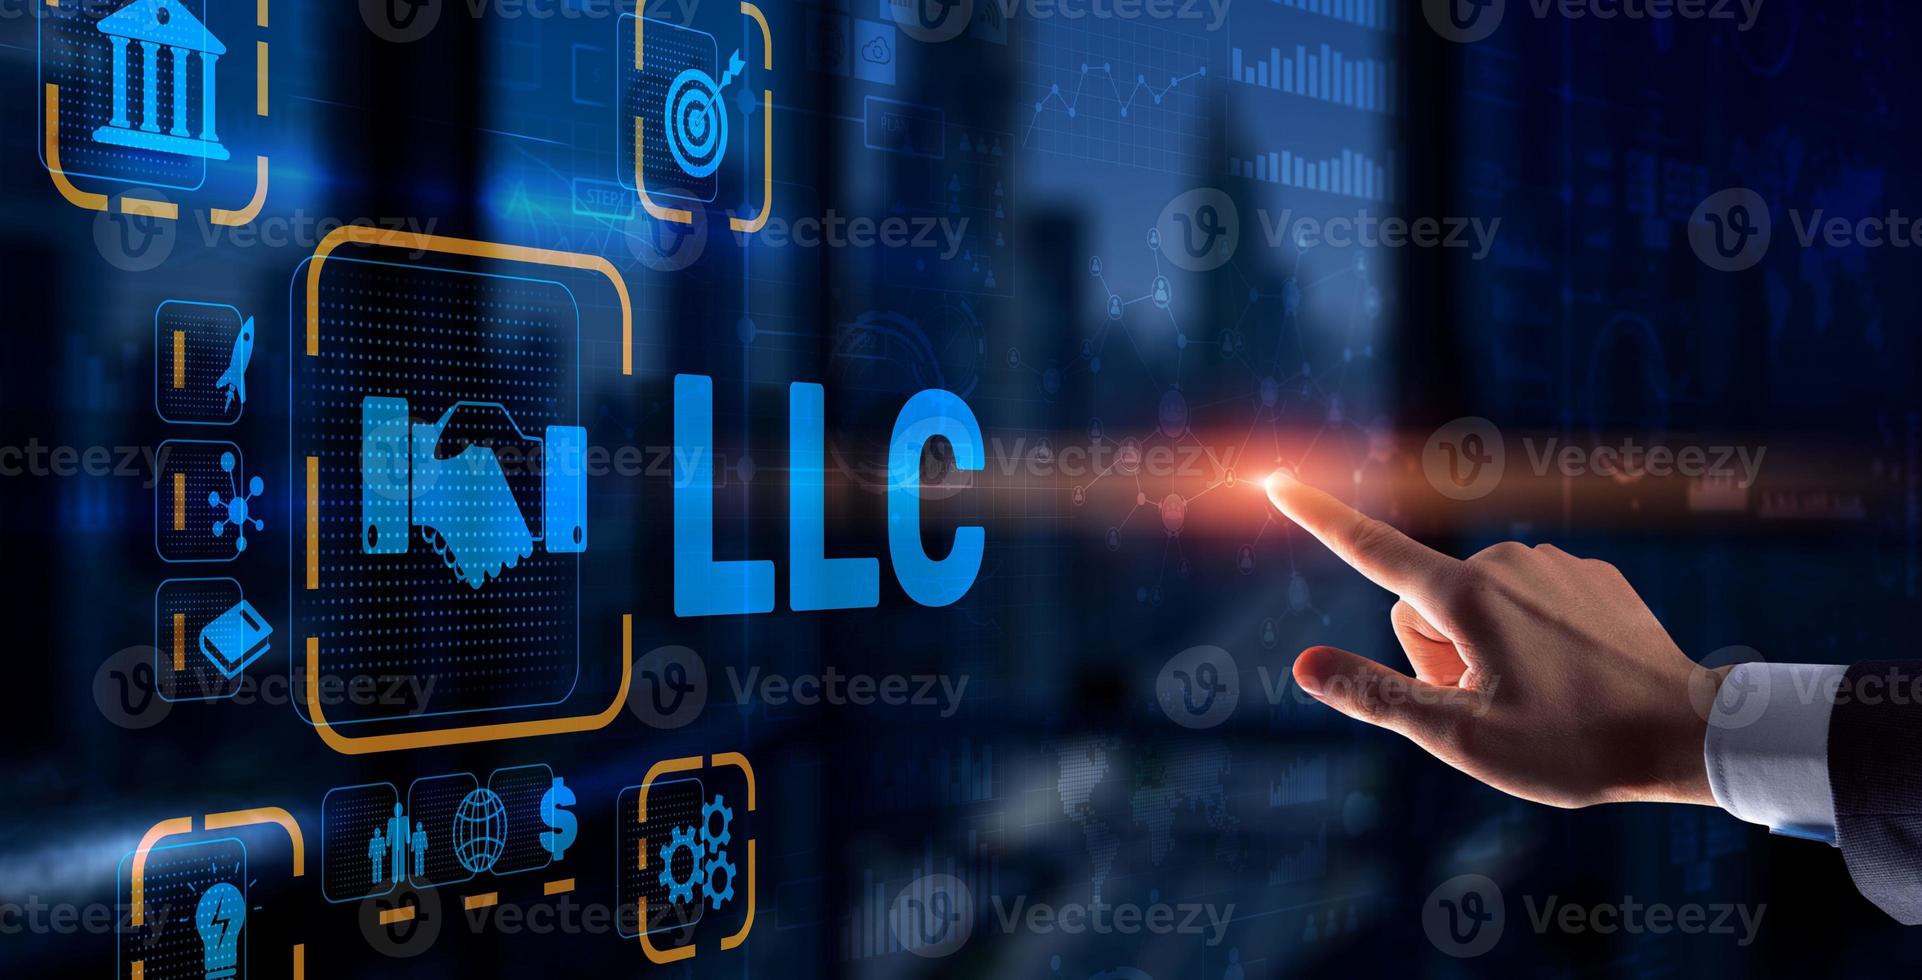 LLC. Limited Liability Company. Business Technology Internet photo